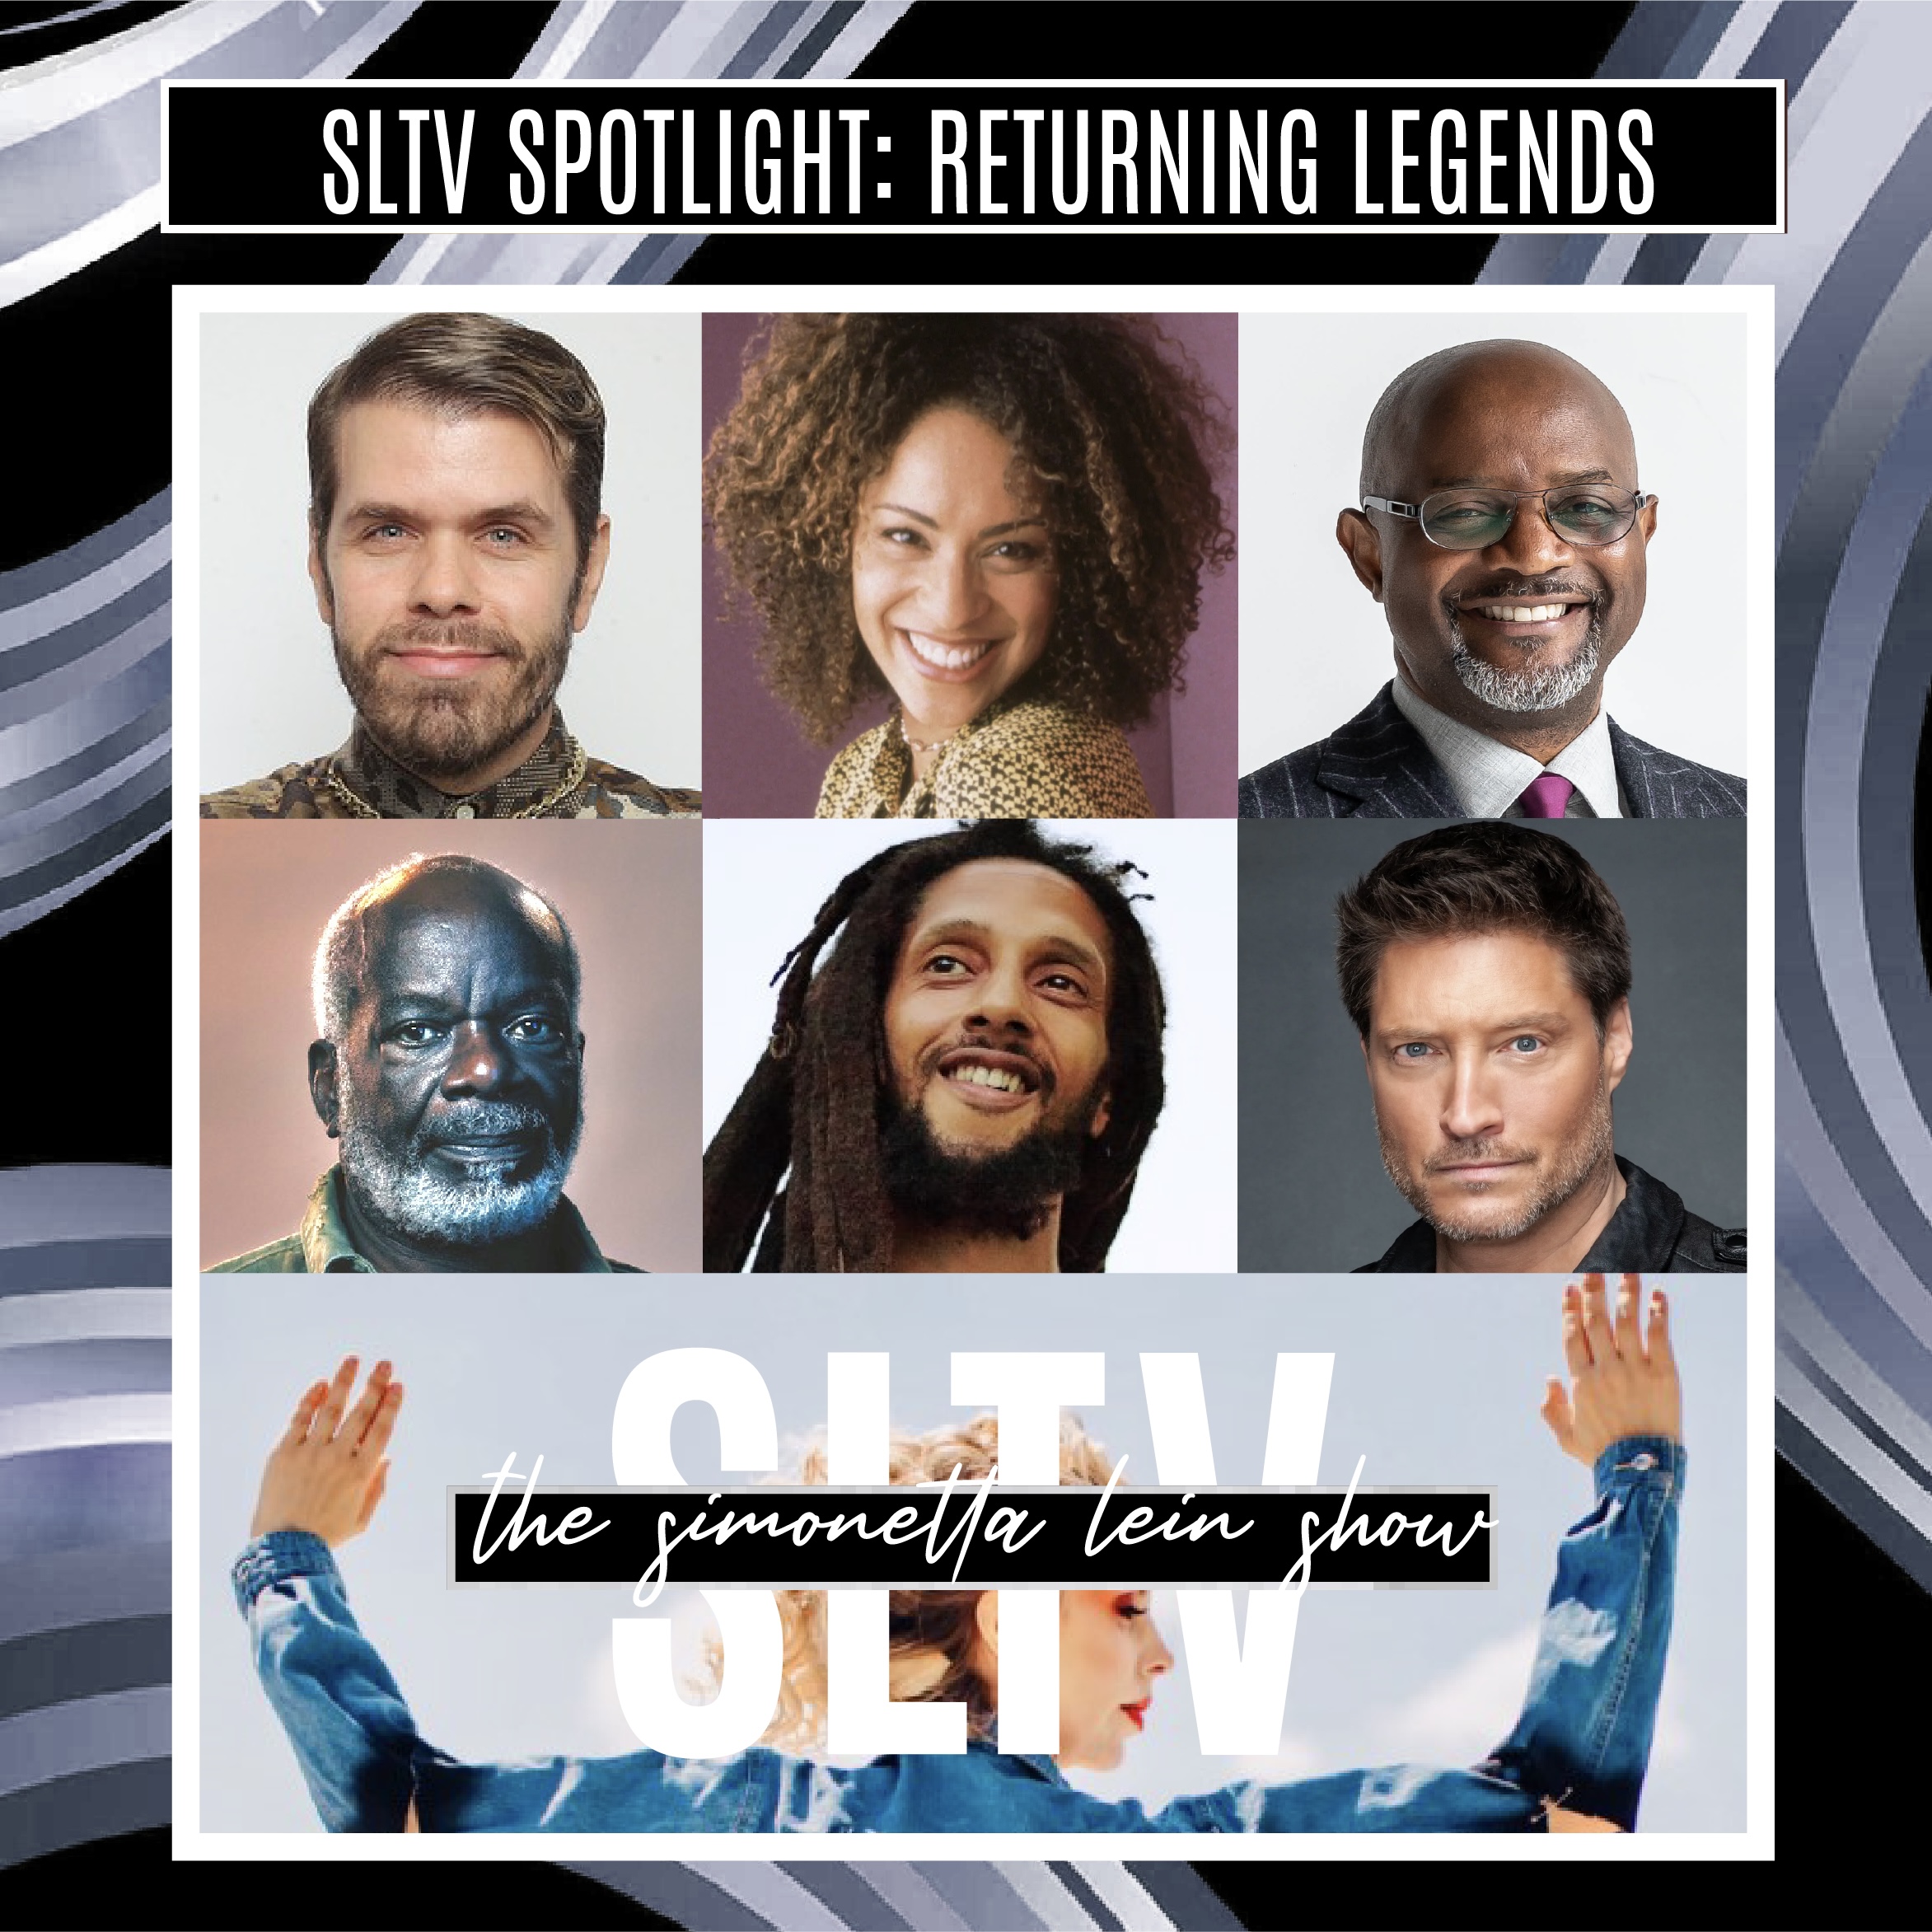 The SLTV Spotlight: Returning Legends